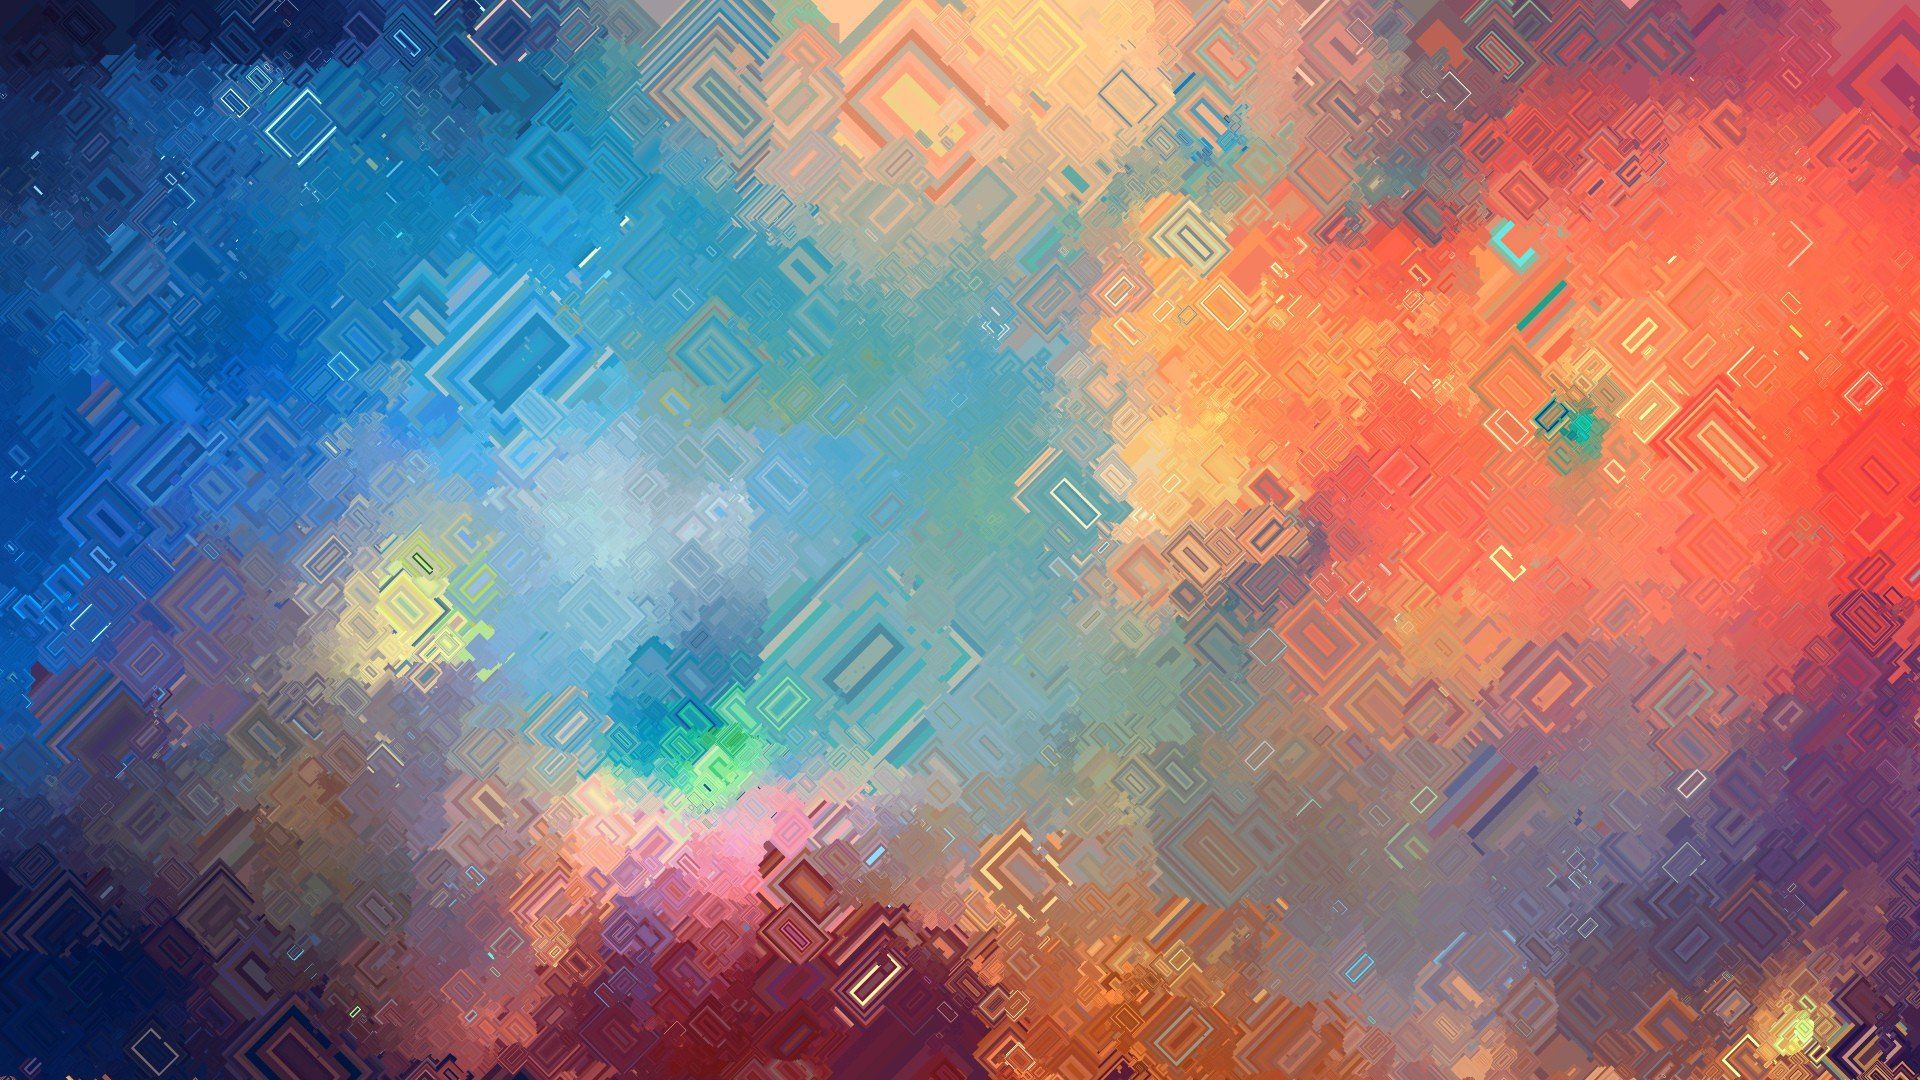 Colorful Digital Art Illustration HD Wallpapers - Wallpaper Cave